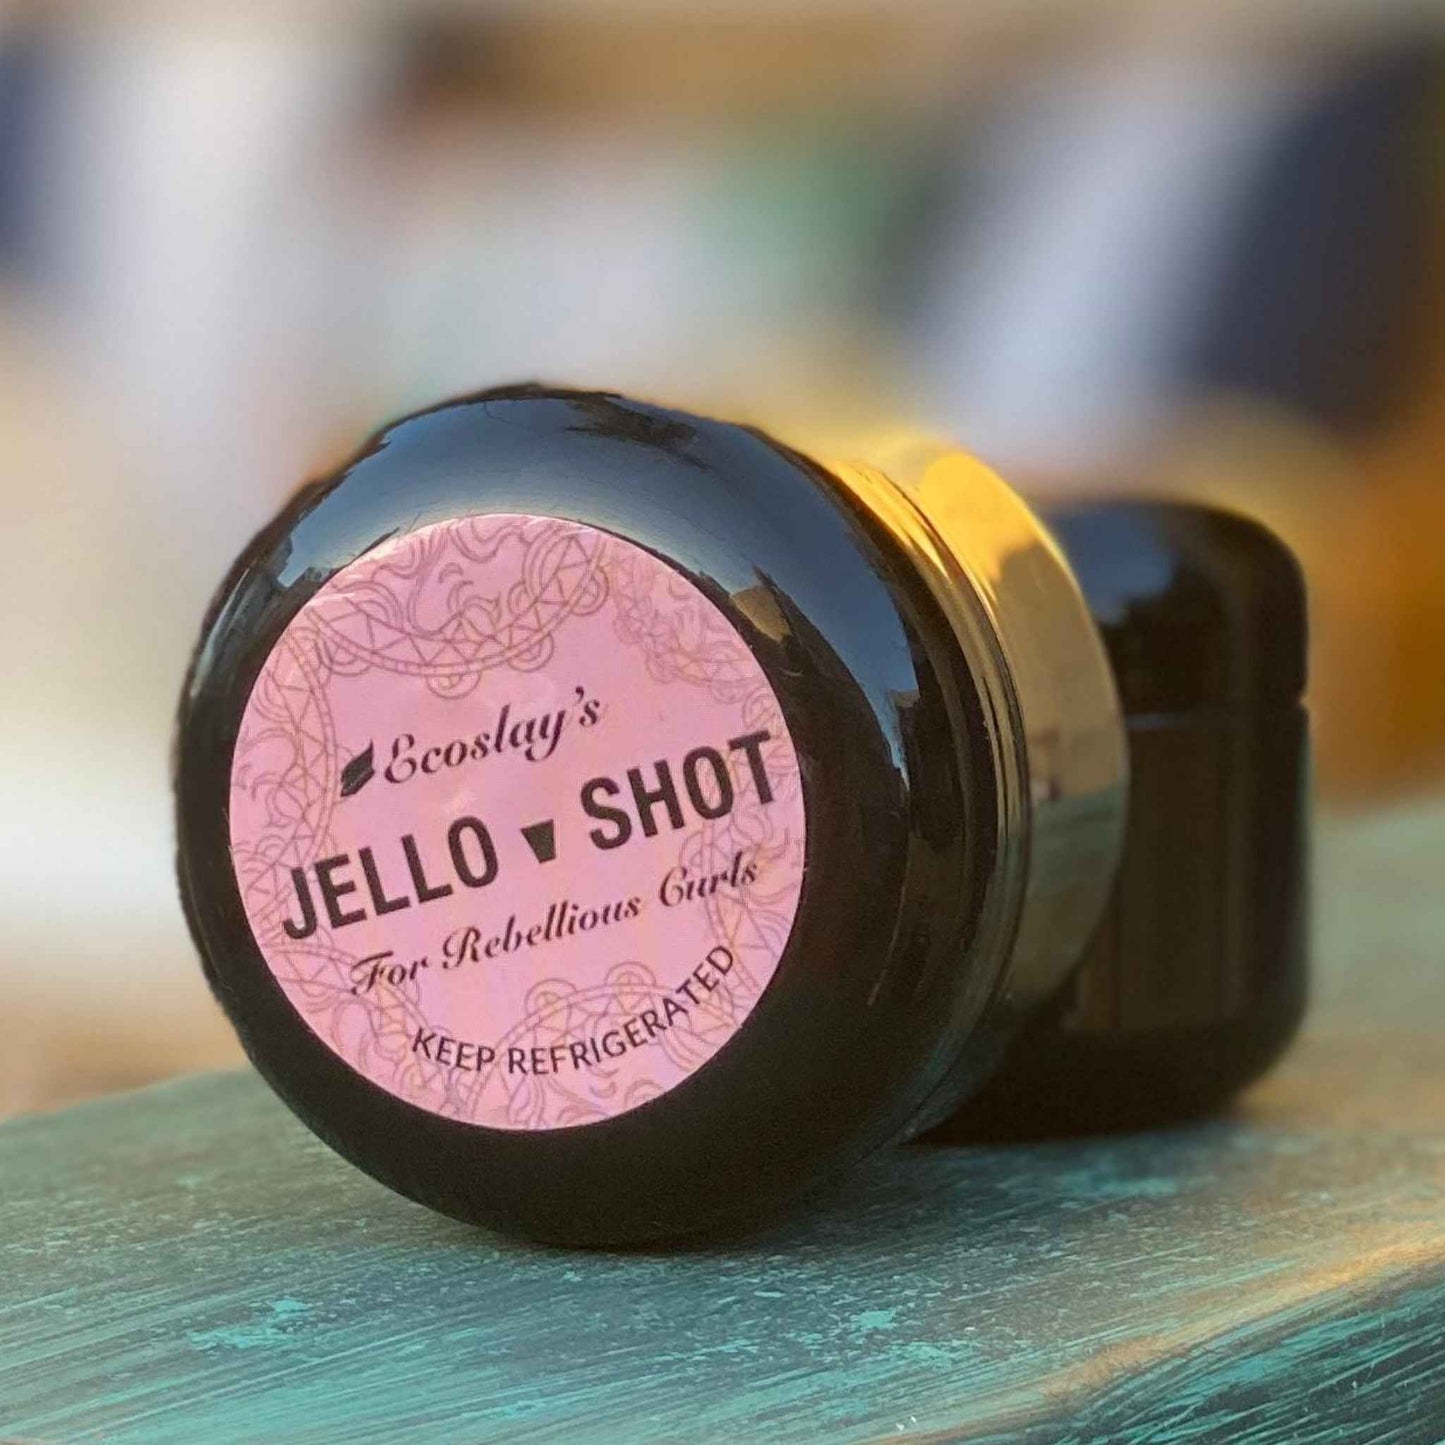 Ecoslay Jello Shot Sample in Australia